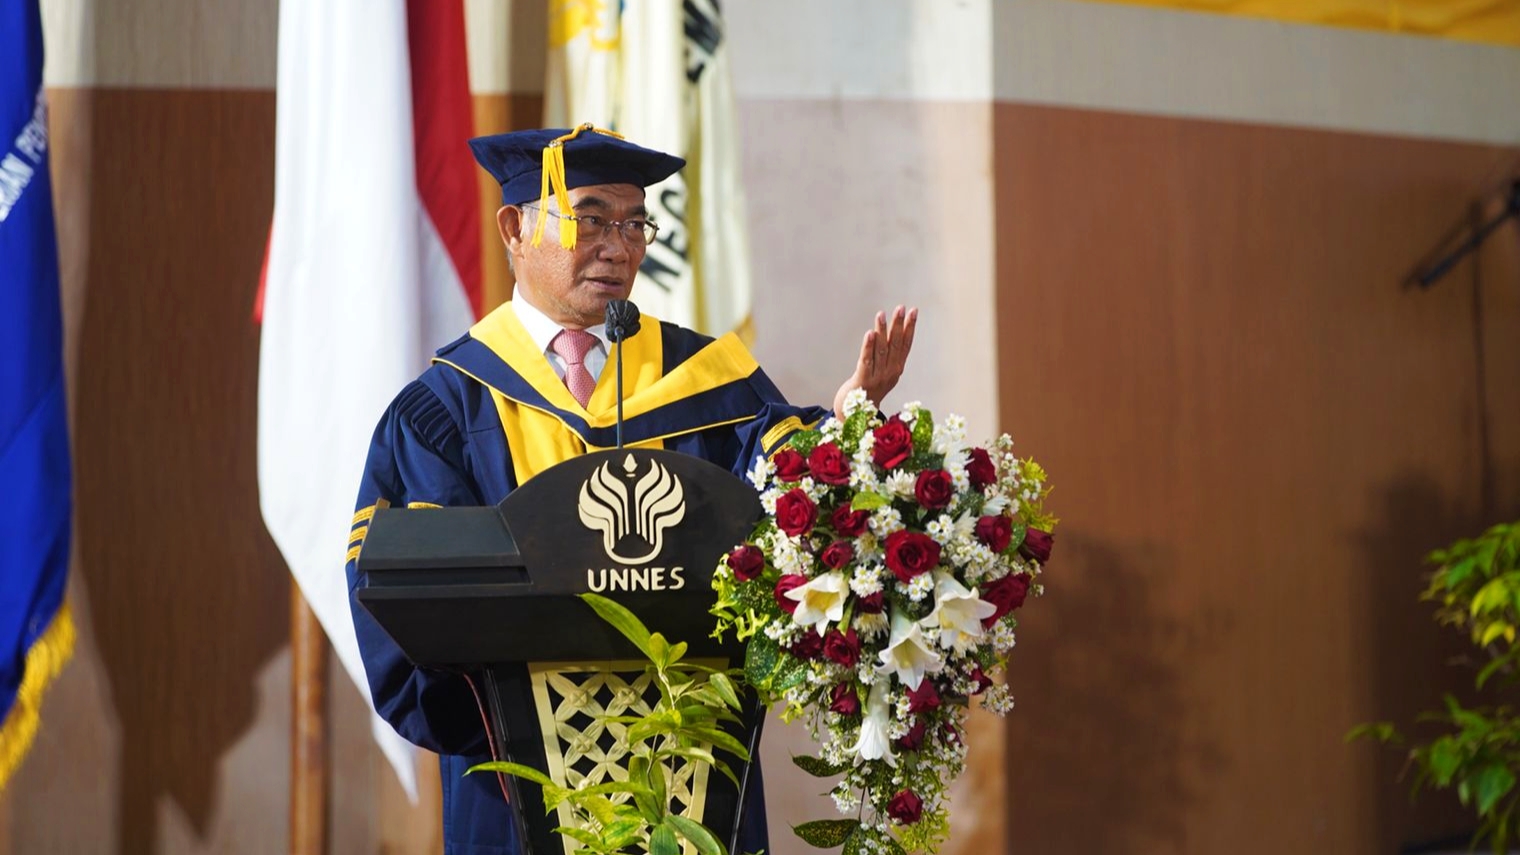 Menko PMK Prof Muhadjir Effendy: UNNES Semakin Kokoh dalam Standing Akademik Menuju Indonesia Emas